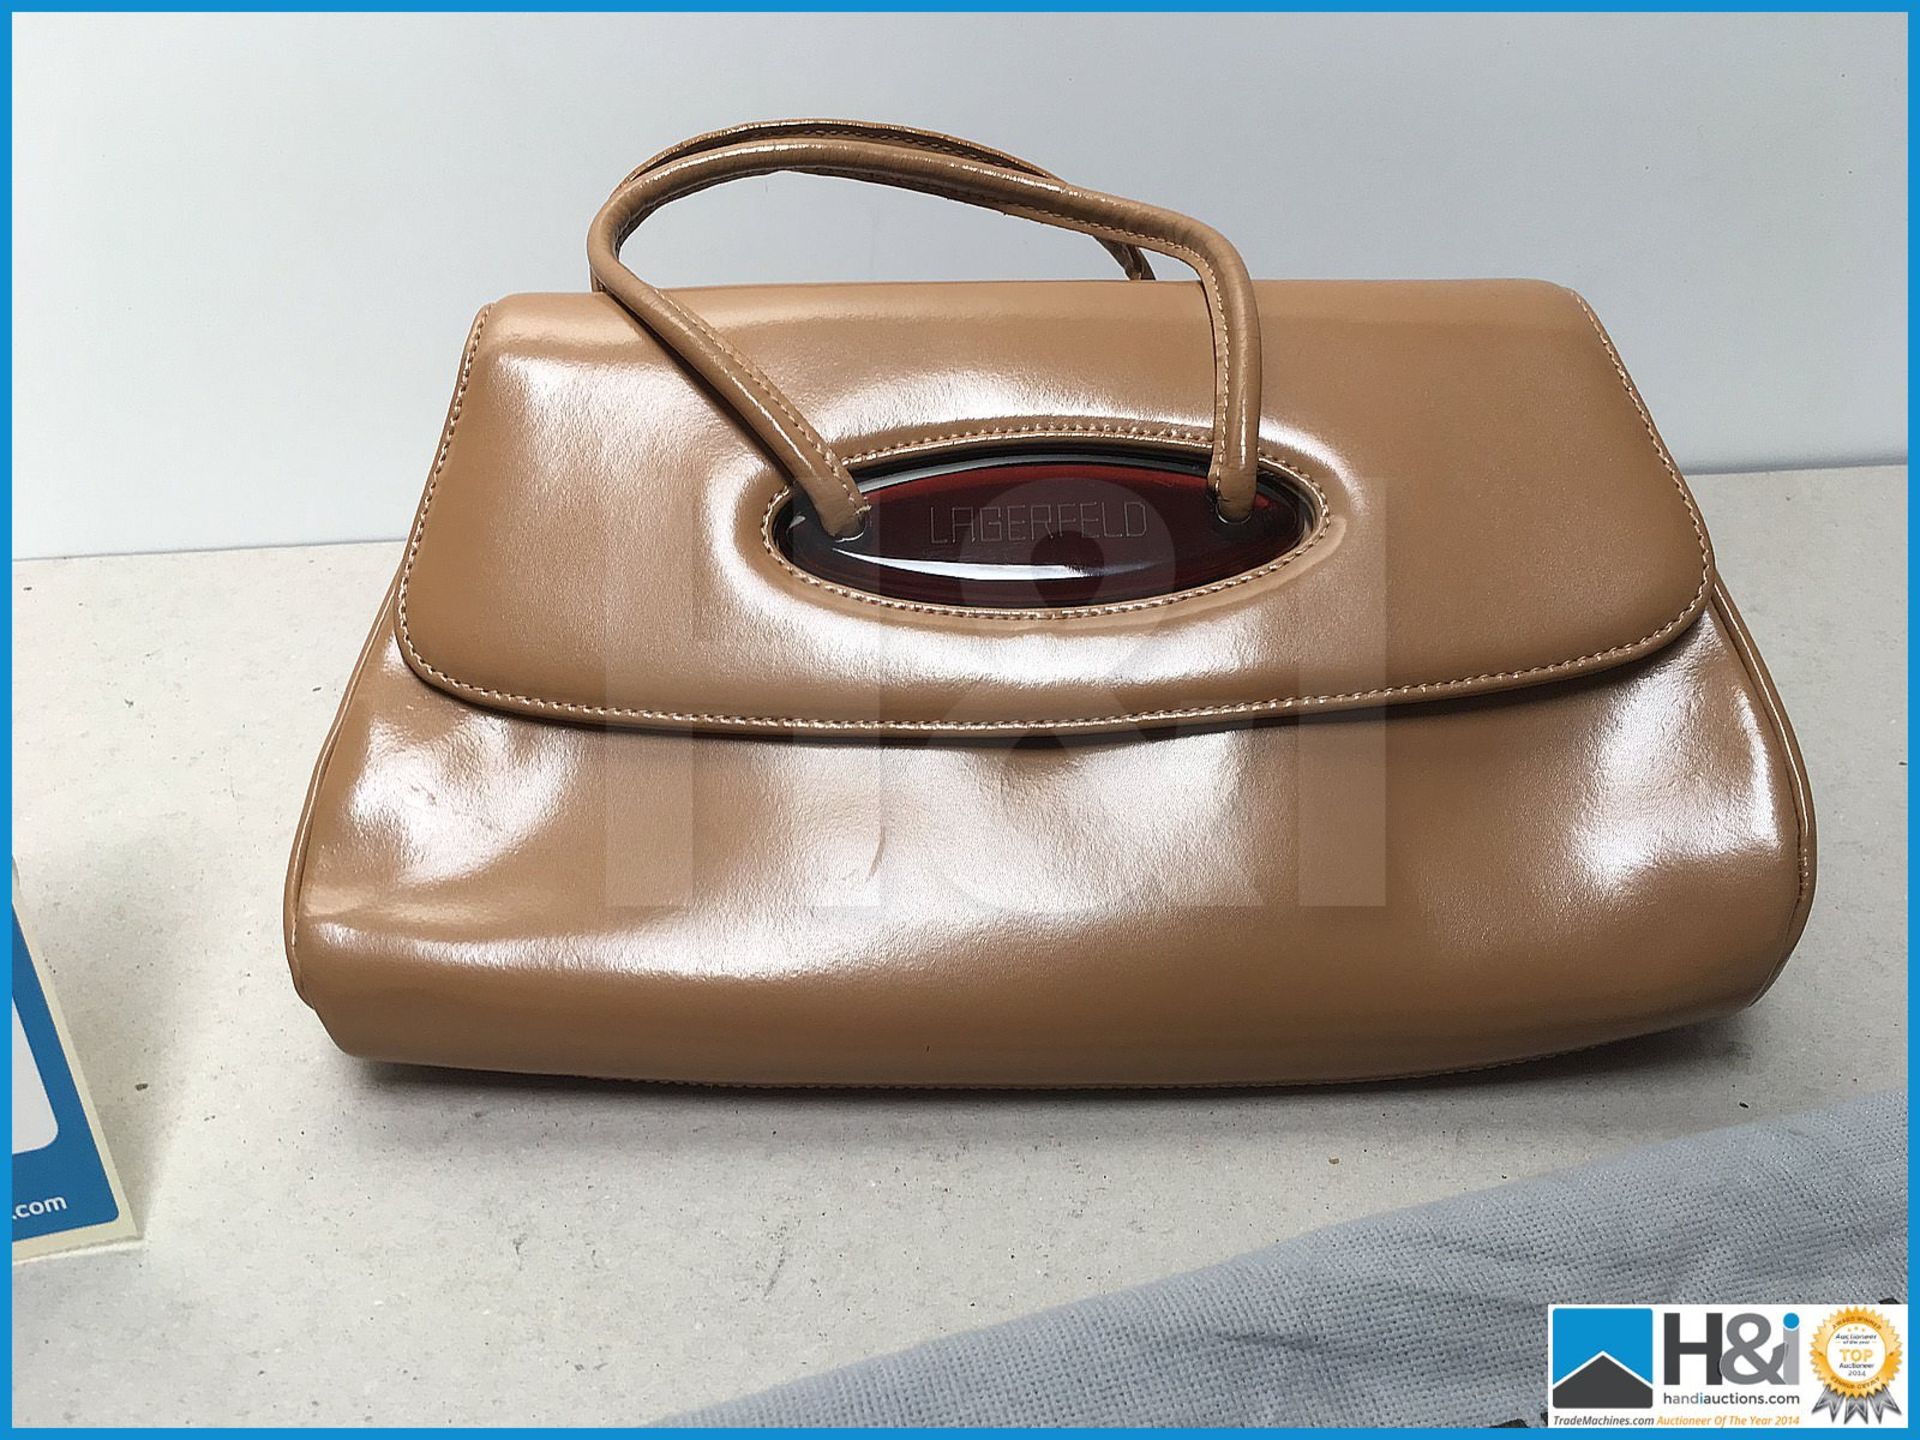 Genuine Karl Largerfeld handbag with original tie bag in excellent condition. - Image 3 of 5